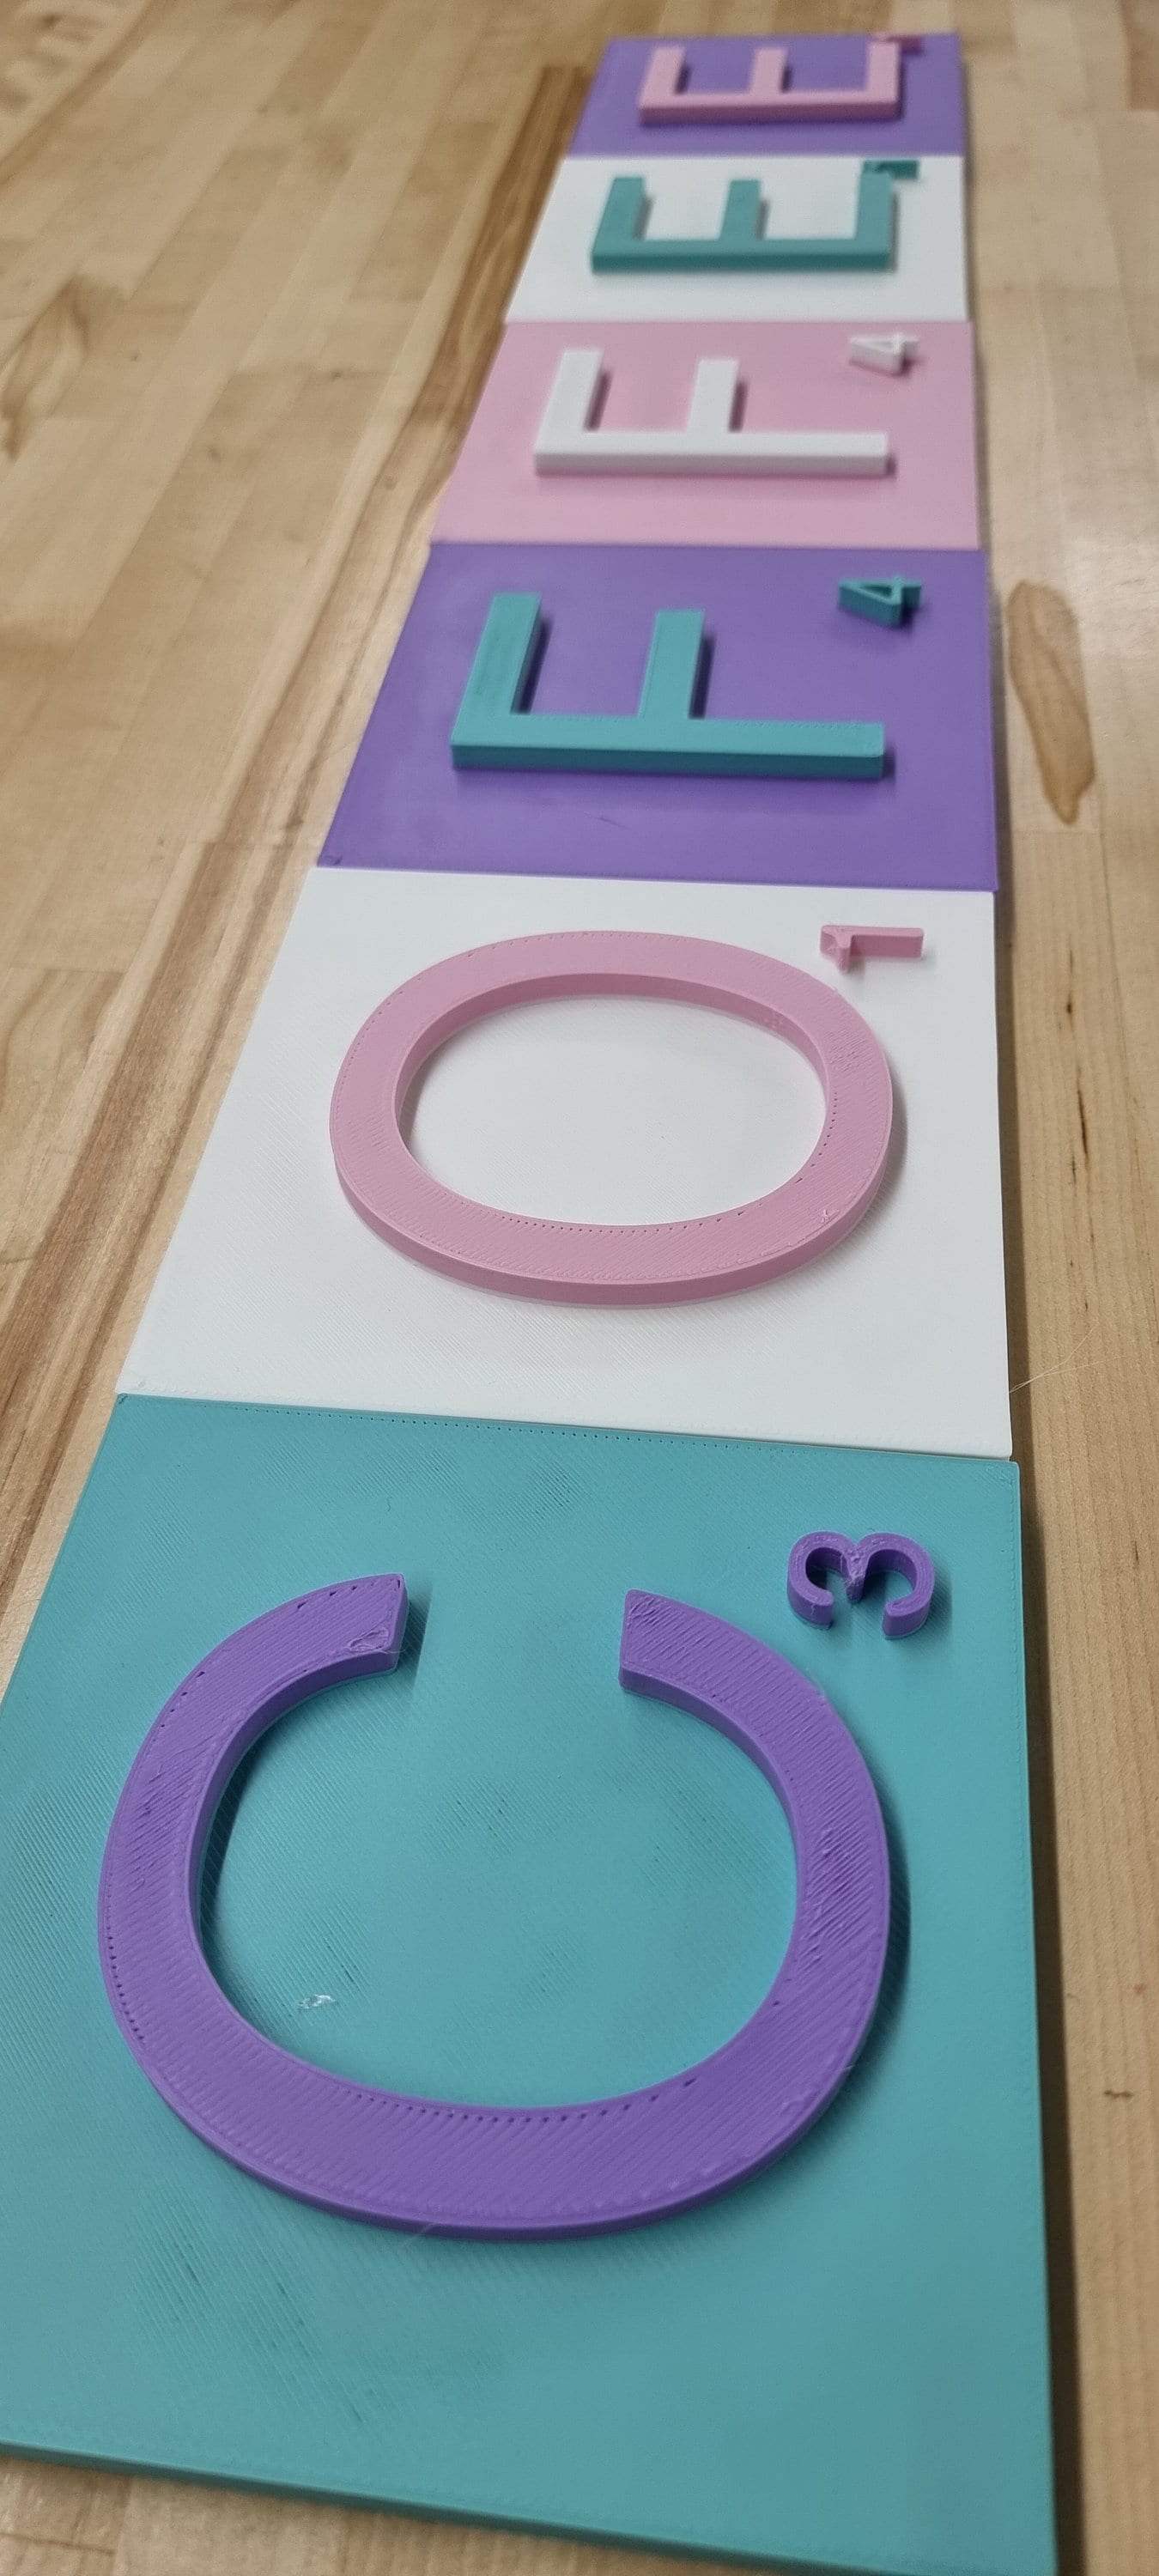 3D Effect Board Game Sign Letter Tiles - 6 Inch. Modern Look 3D Effect Sign Letter Tiles In Tons Of Colors!